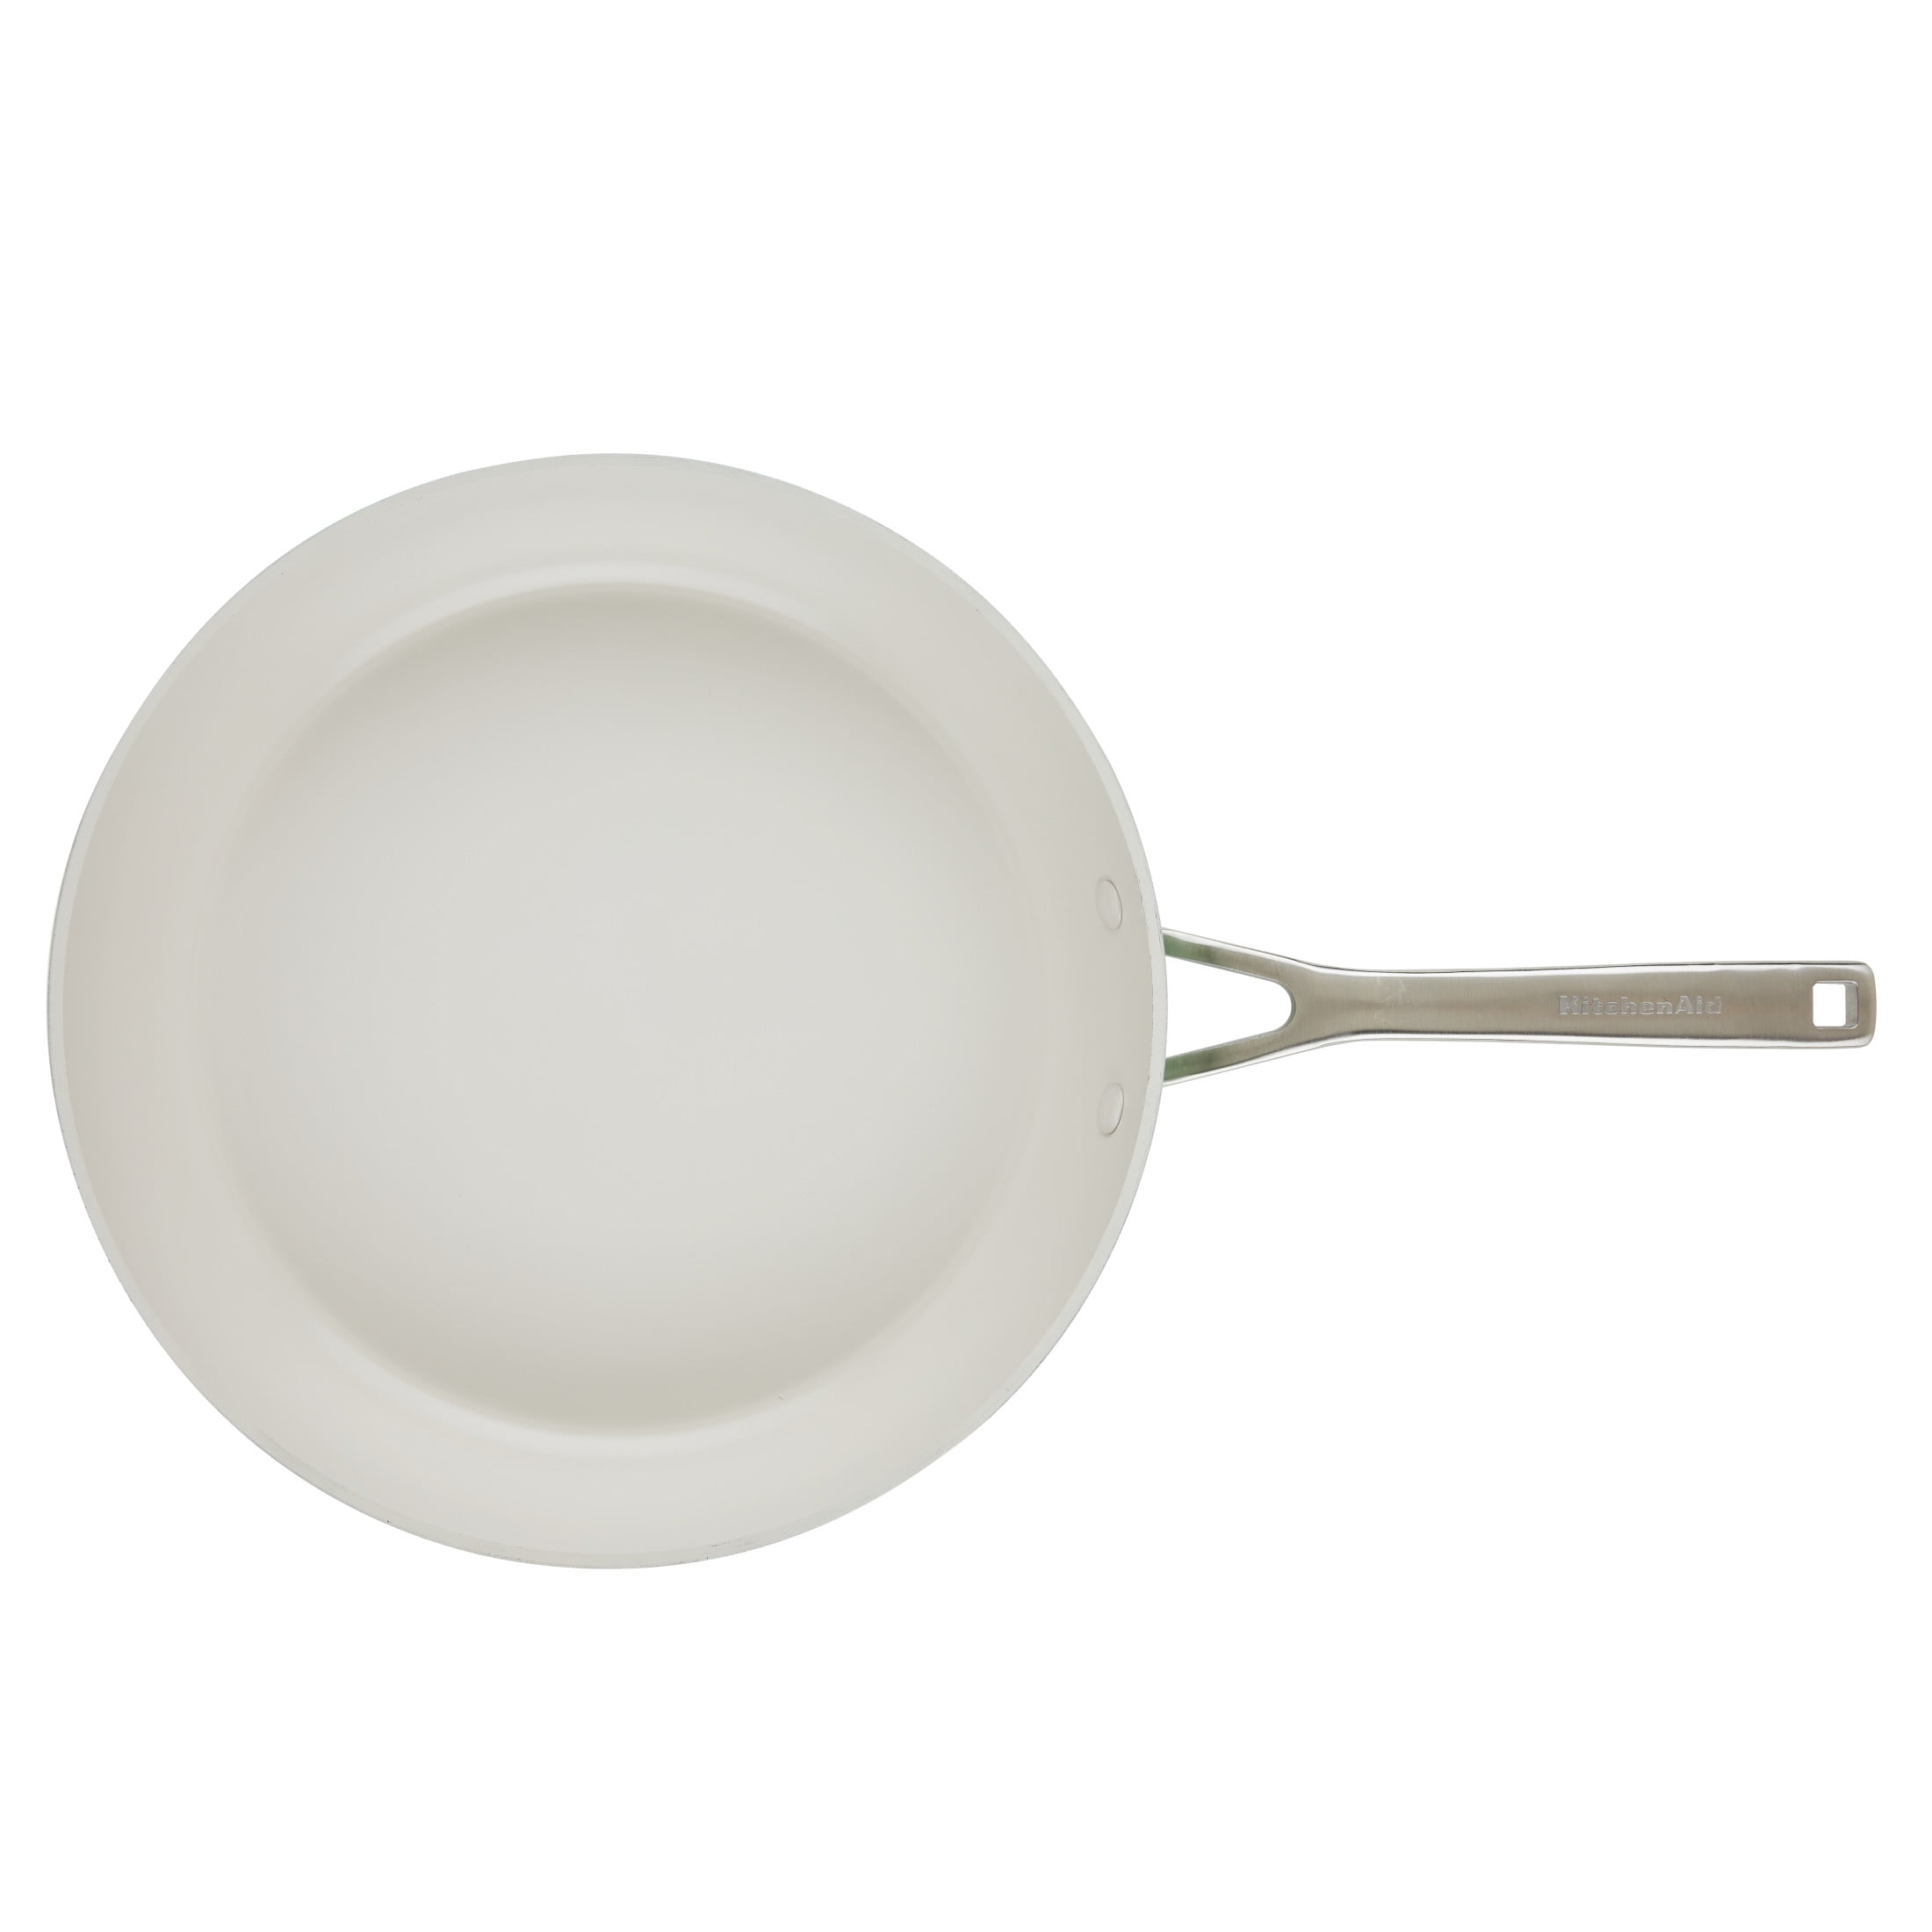 KitchenAid 3-Quart Hard Anodized Ceramic Nonstick Sauce Pan, Pistachio